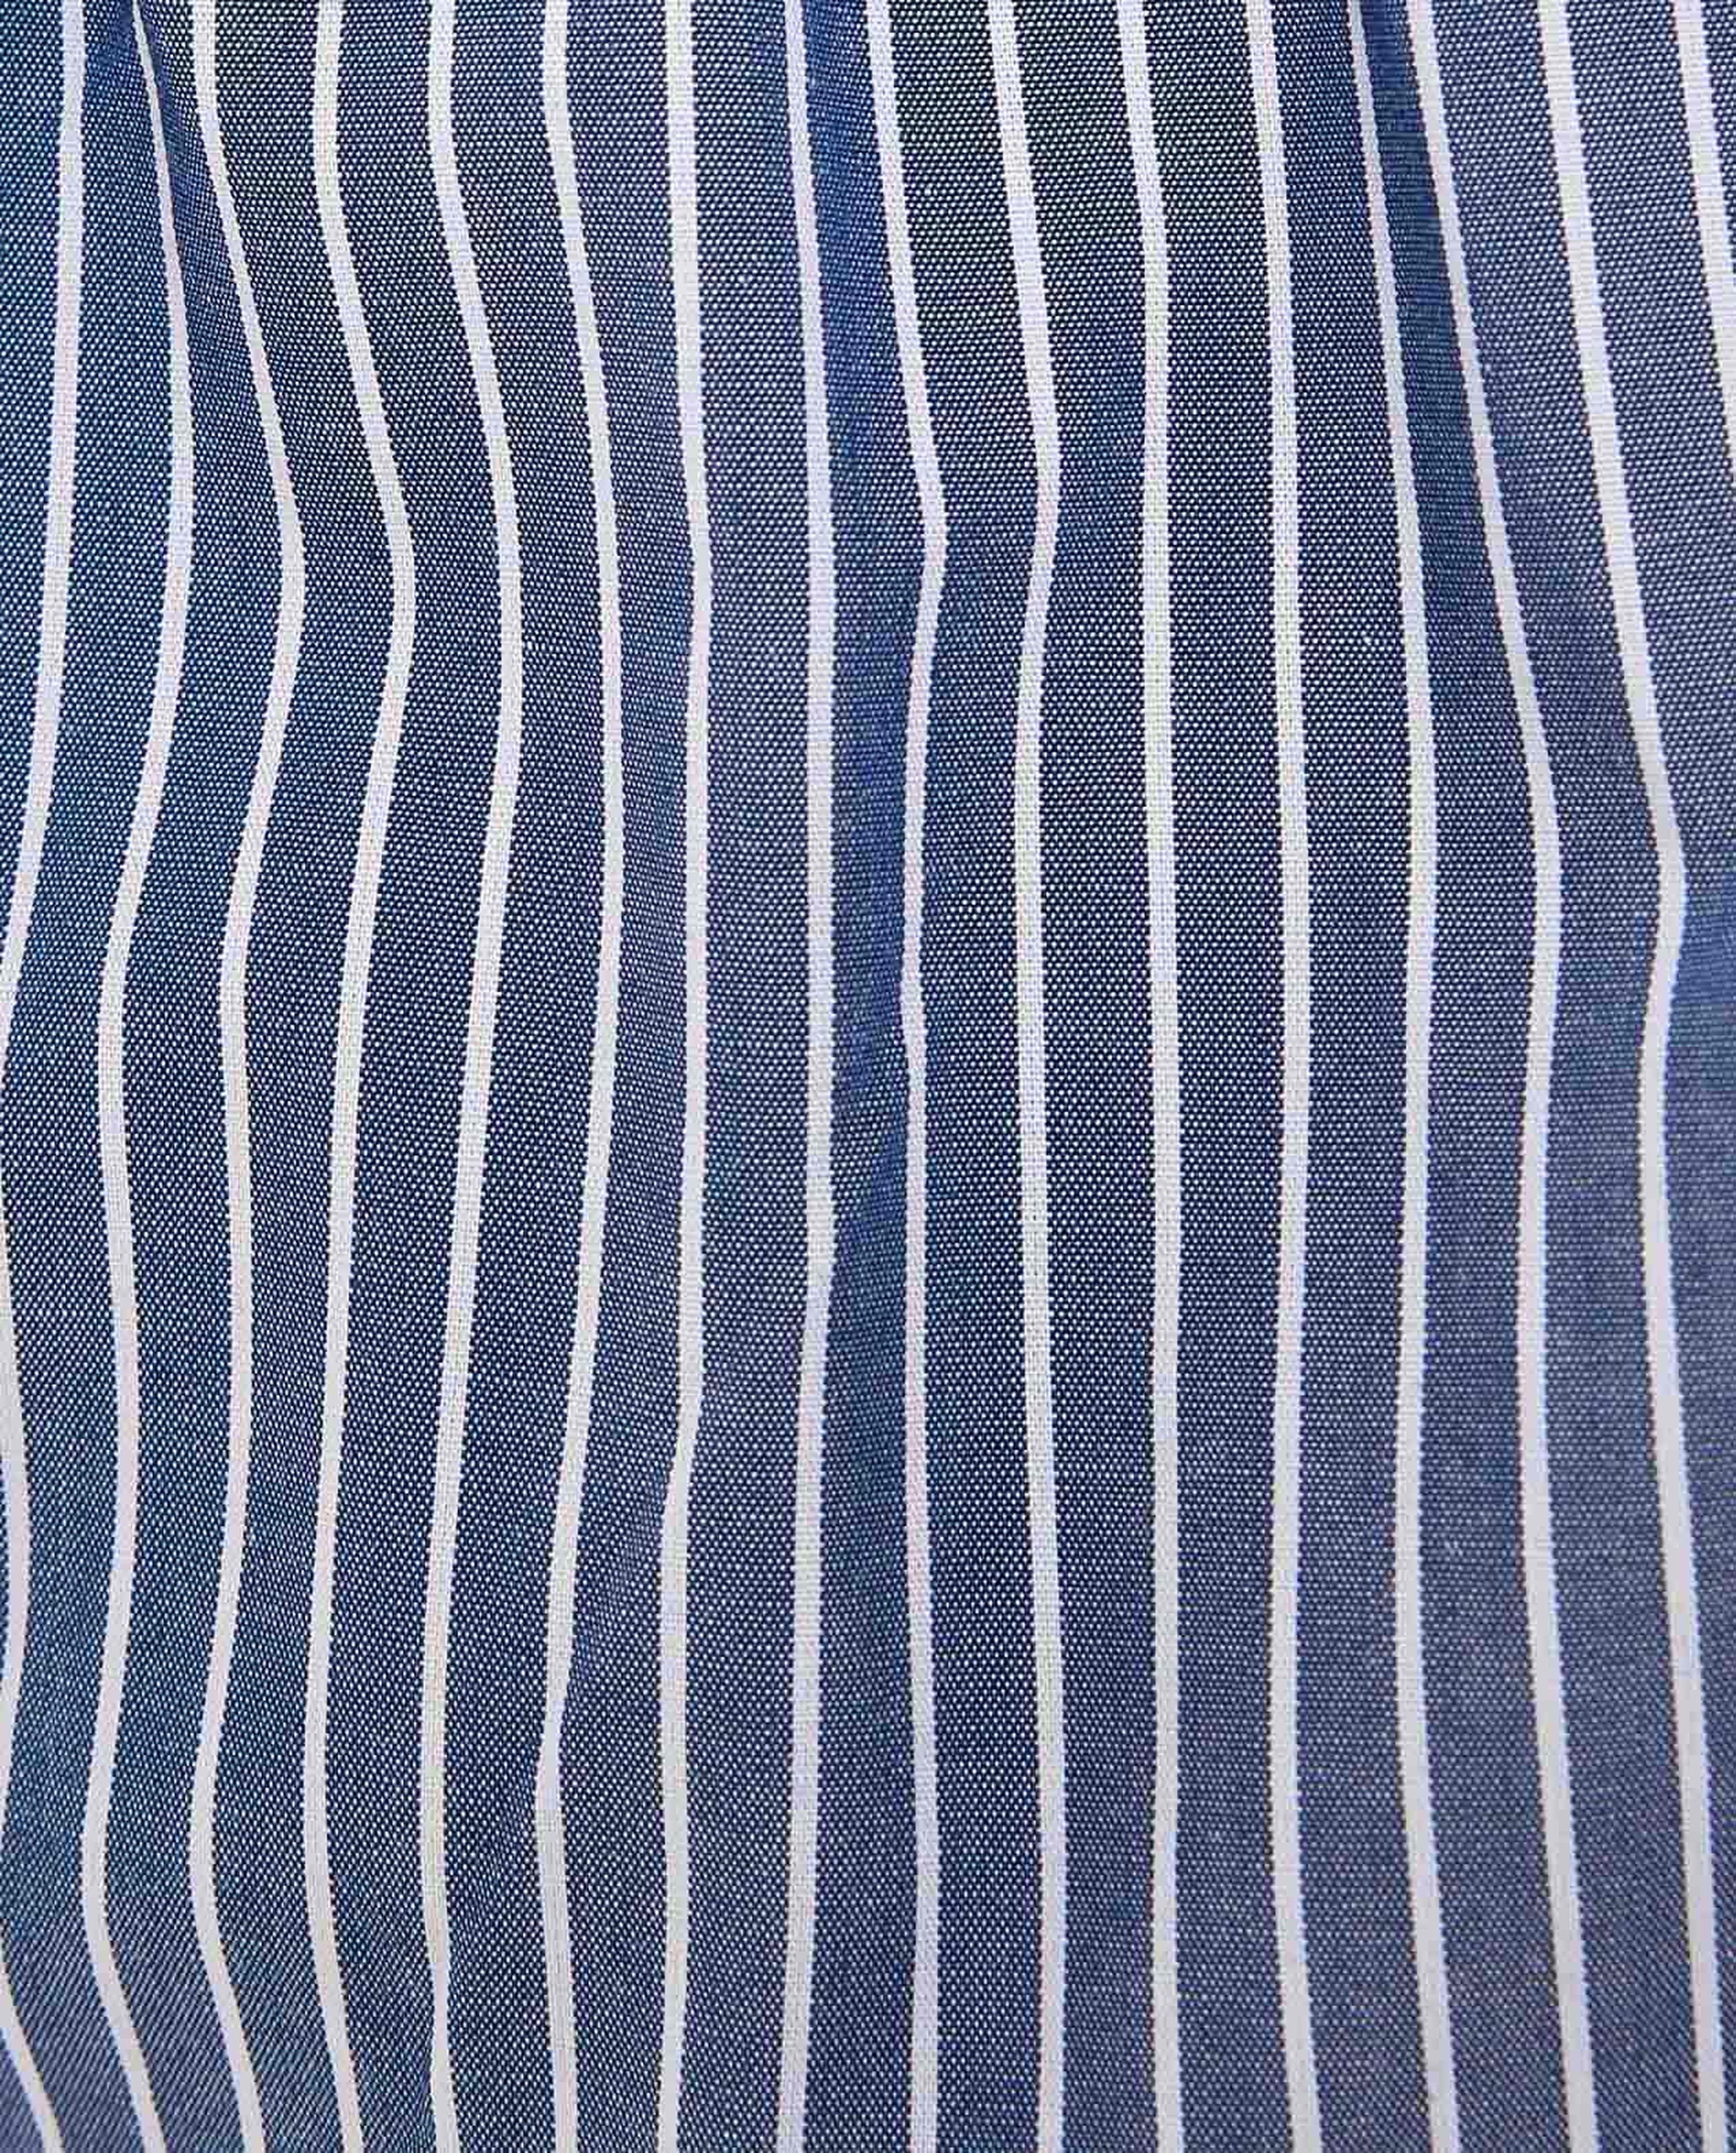 Striped Lounge Pants with Drawstring Waist